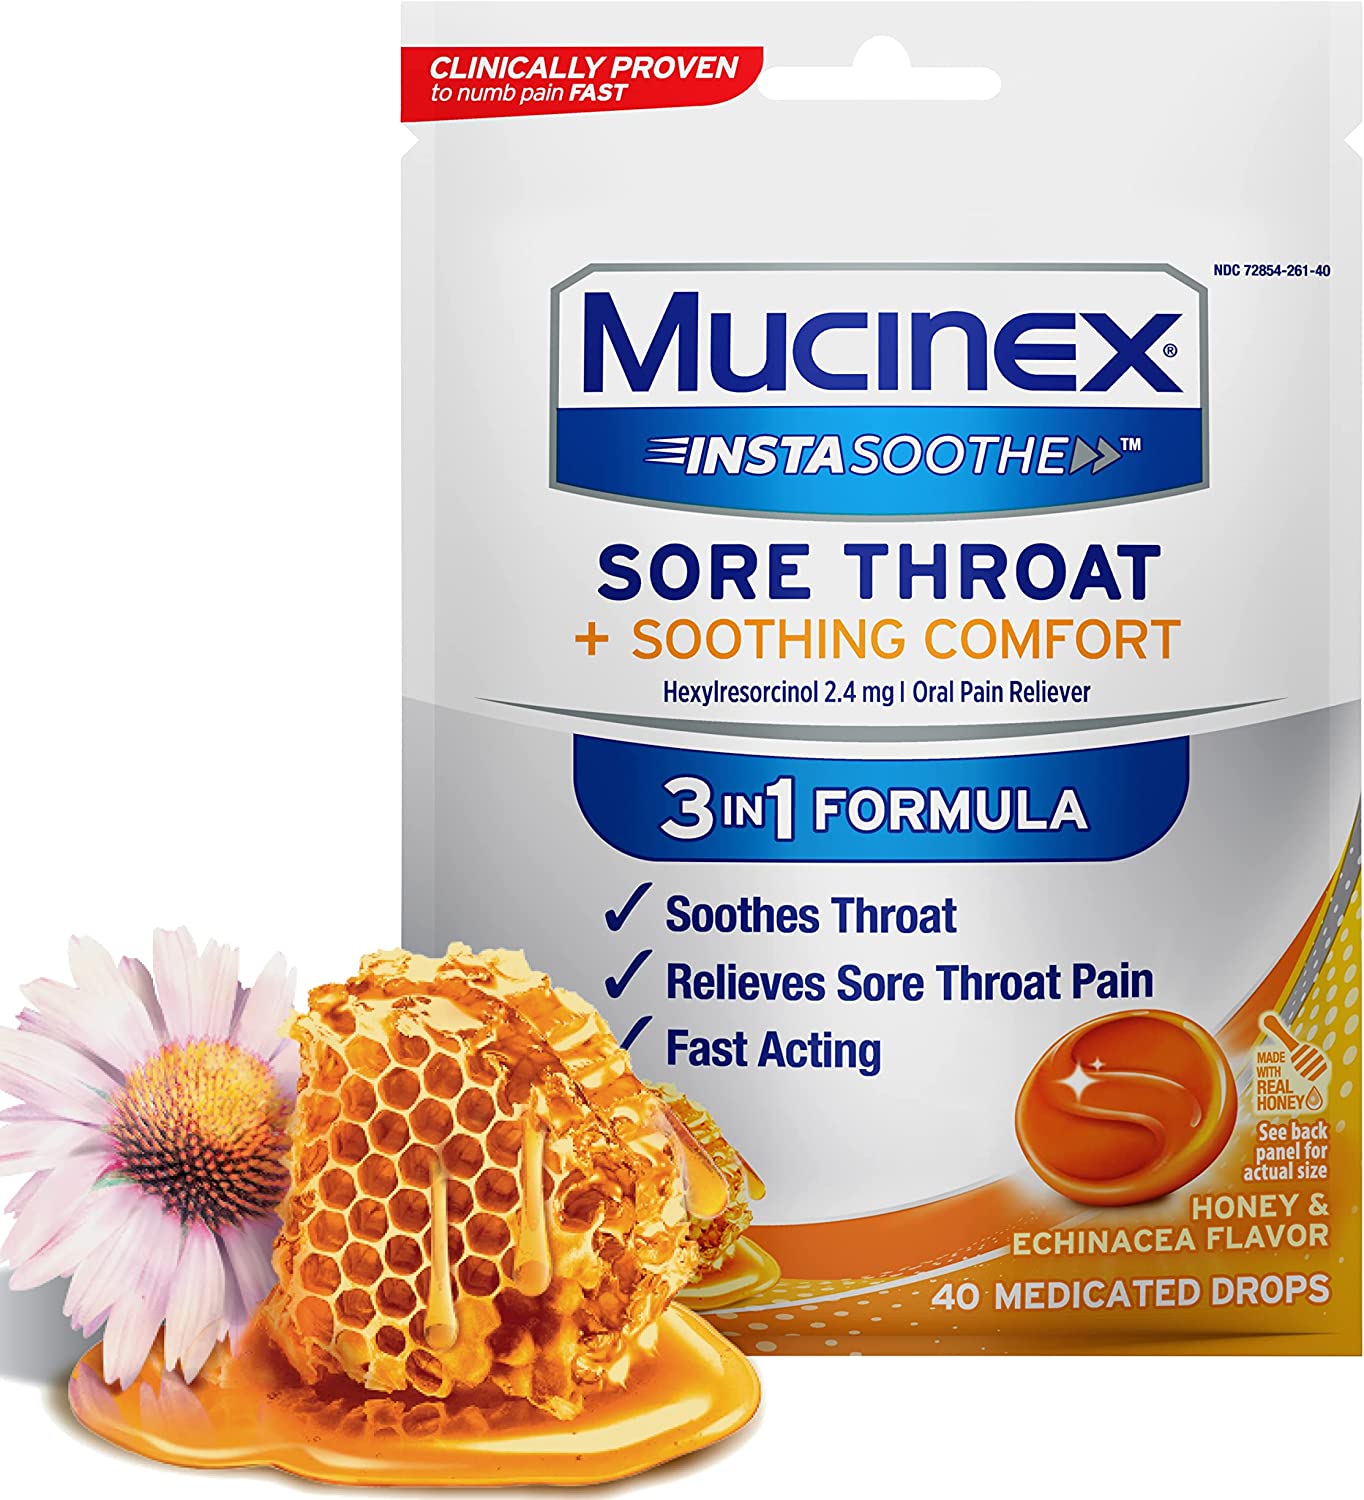 MUCINEX® InstaSoothe™ Sore Throat + Soothing Comfort - Honey & Echinacea 36/40 ct. (Pack of 3) - image 1 of 5